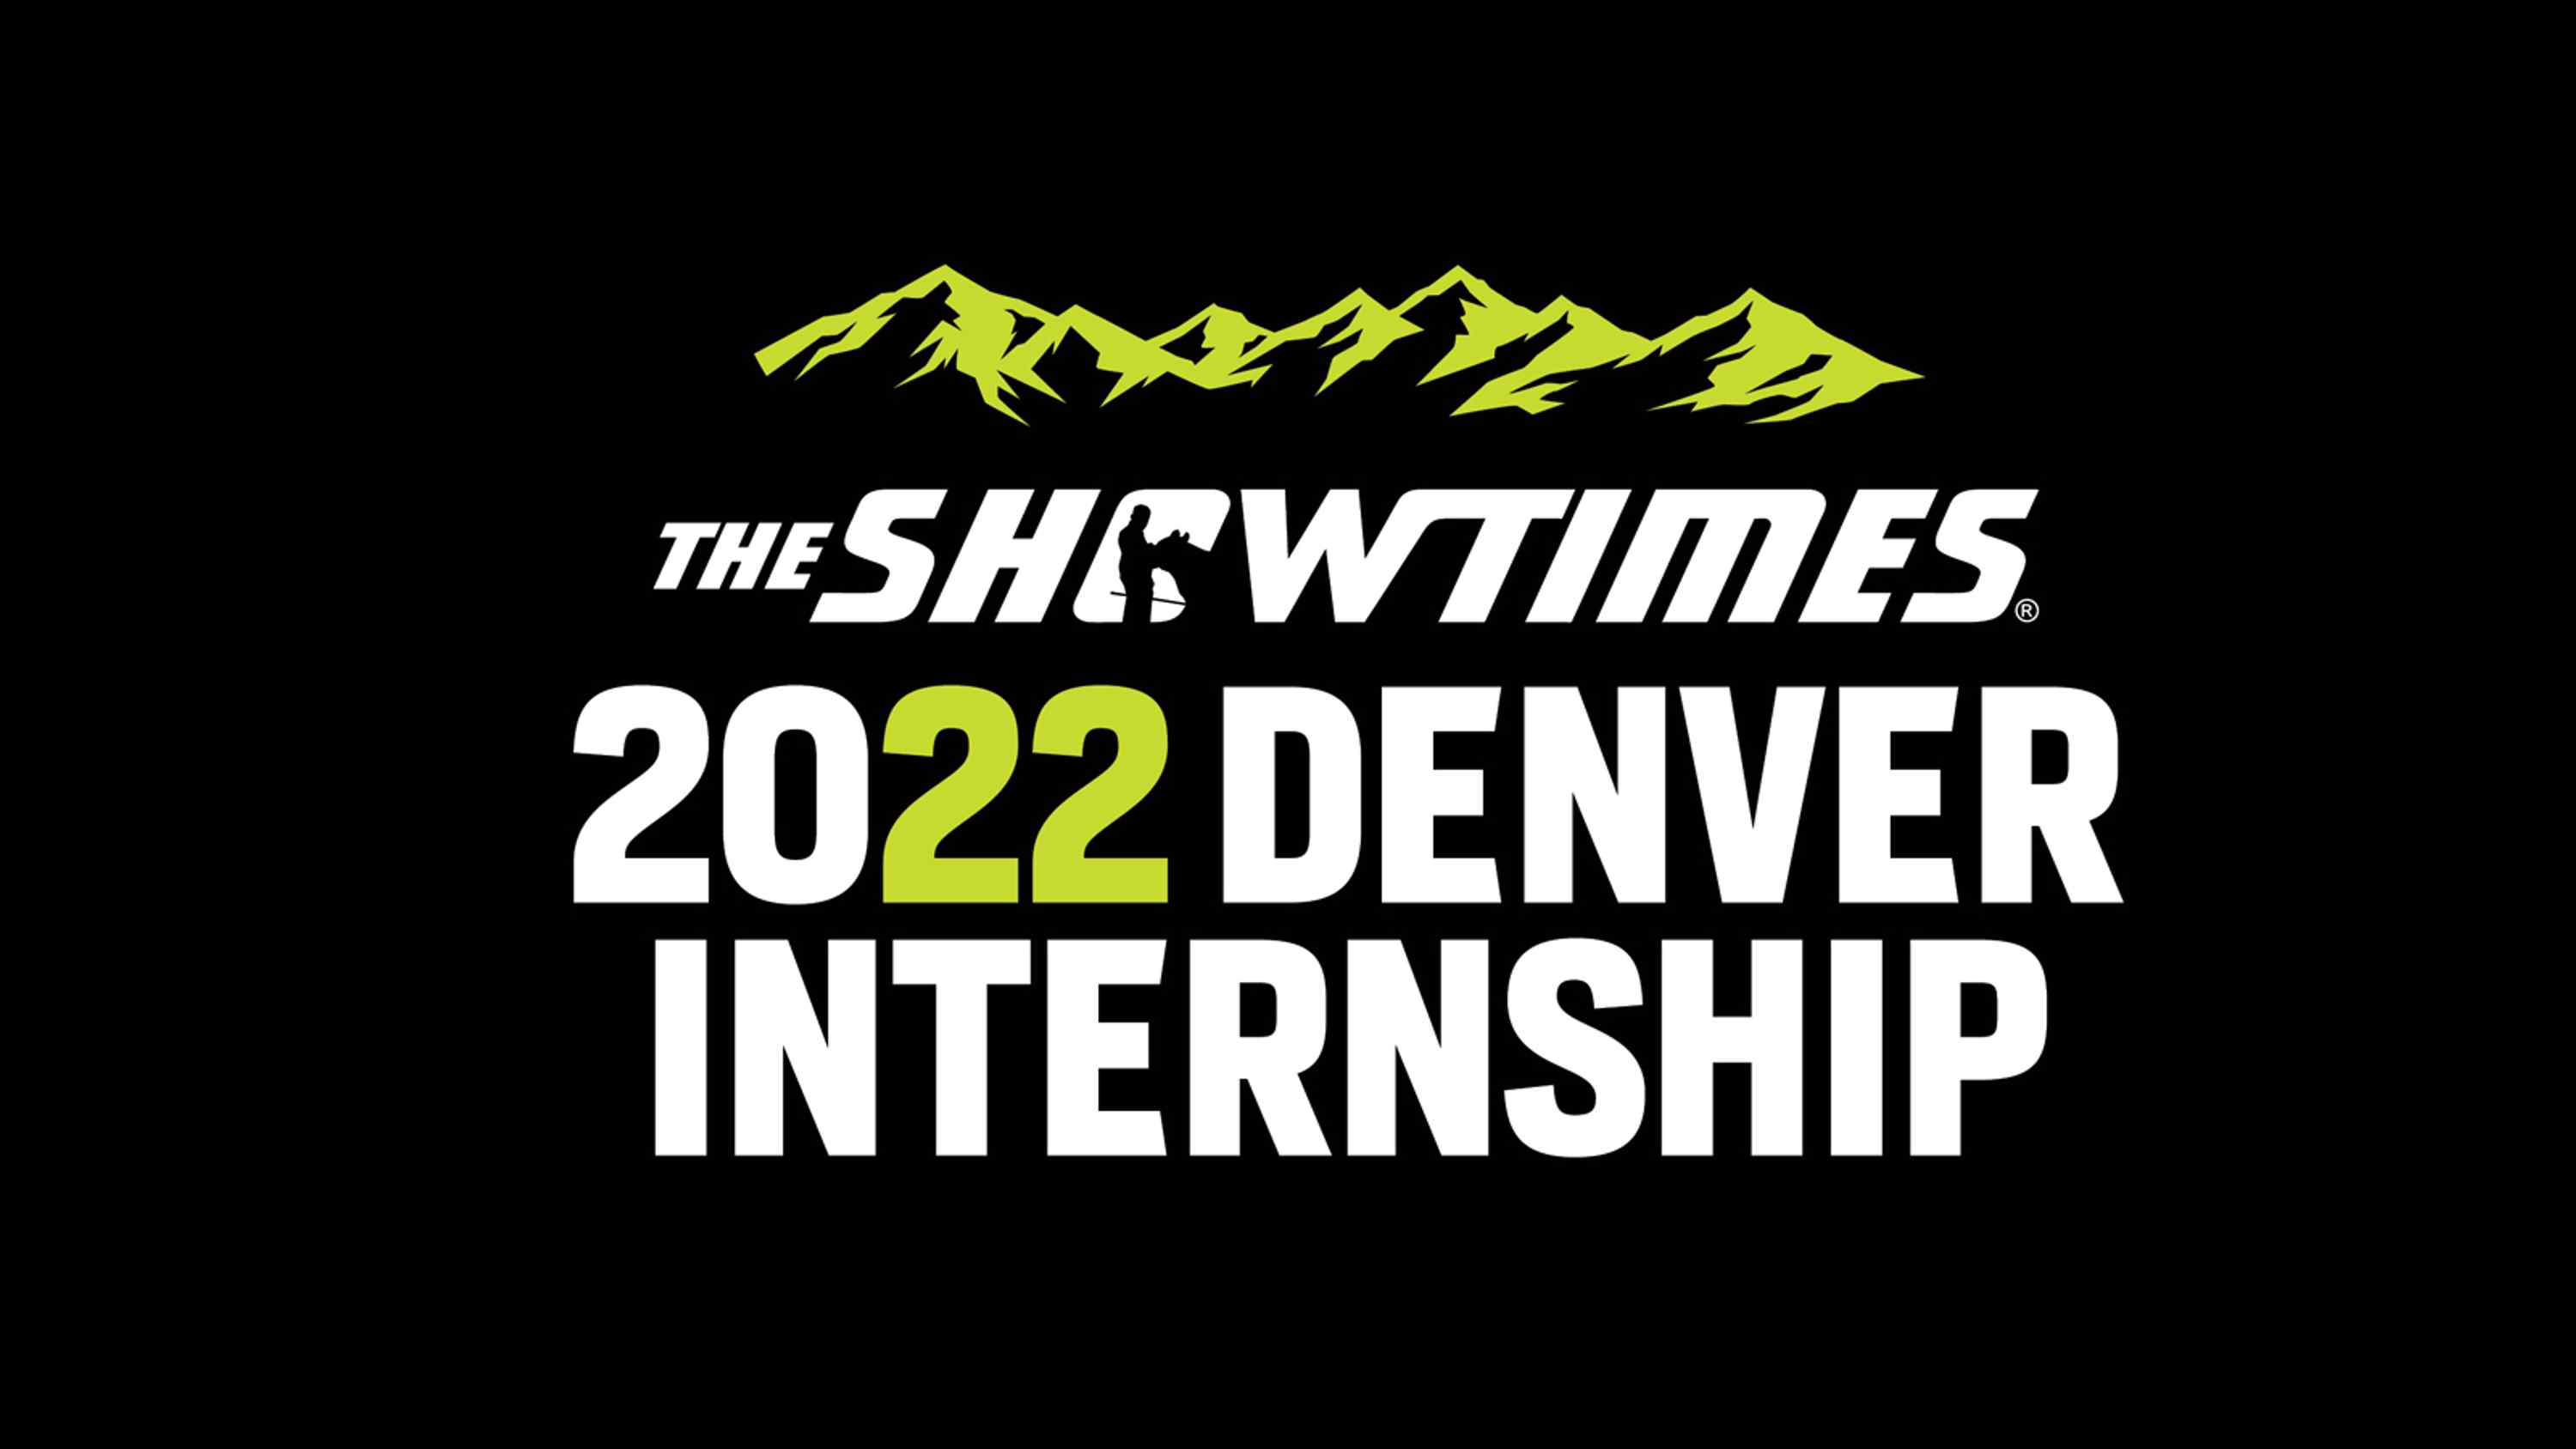 The Showtimes 2022 Denver Internship